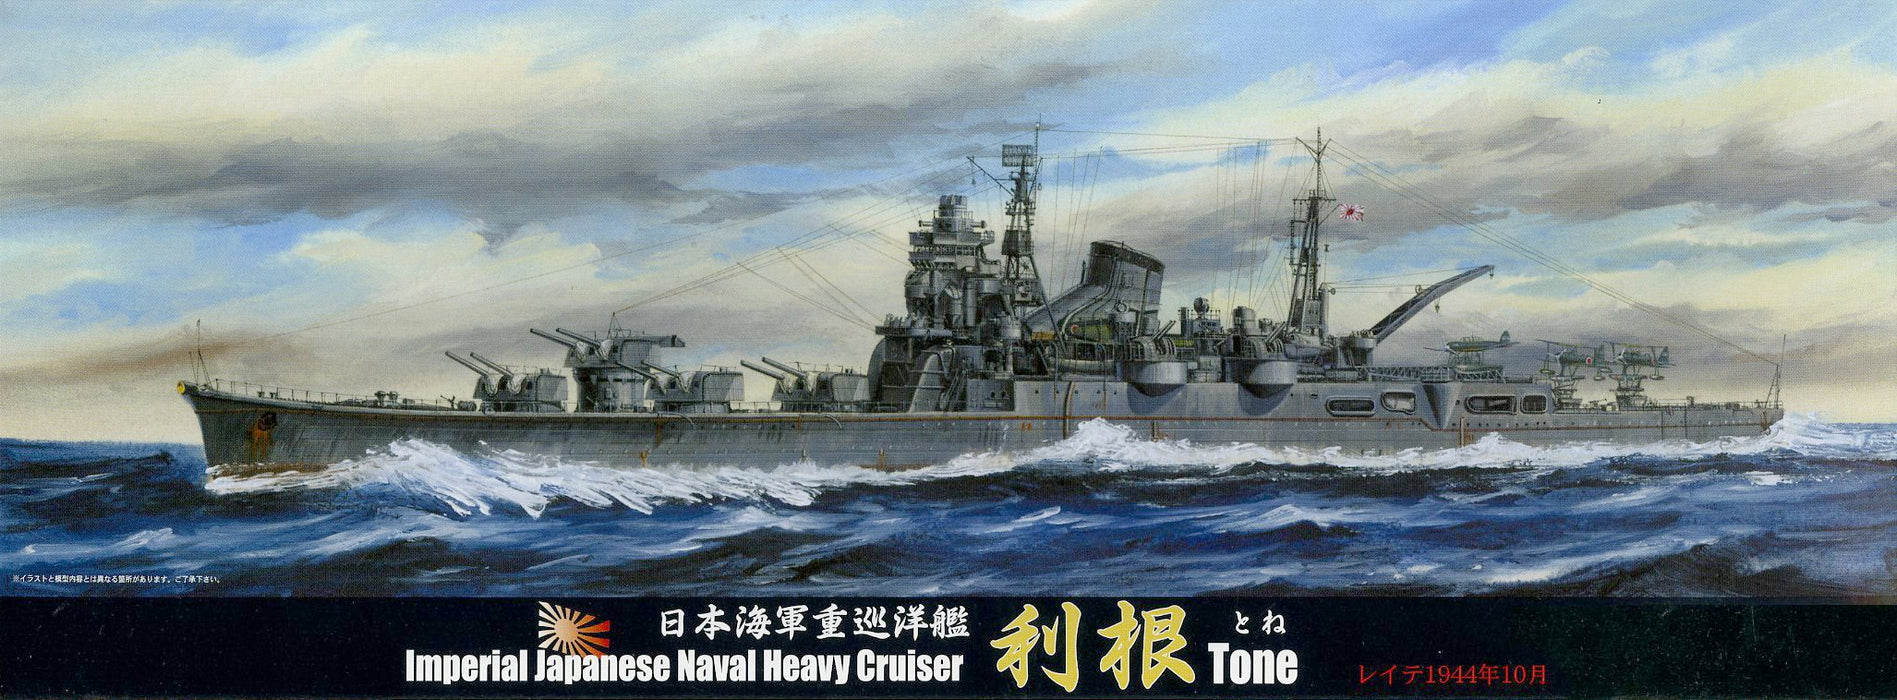 FUJIMI Toku-30 Ijn Heavy Cruiser Tone 1944 1/700 Scale Kit